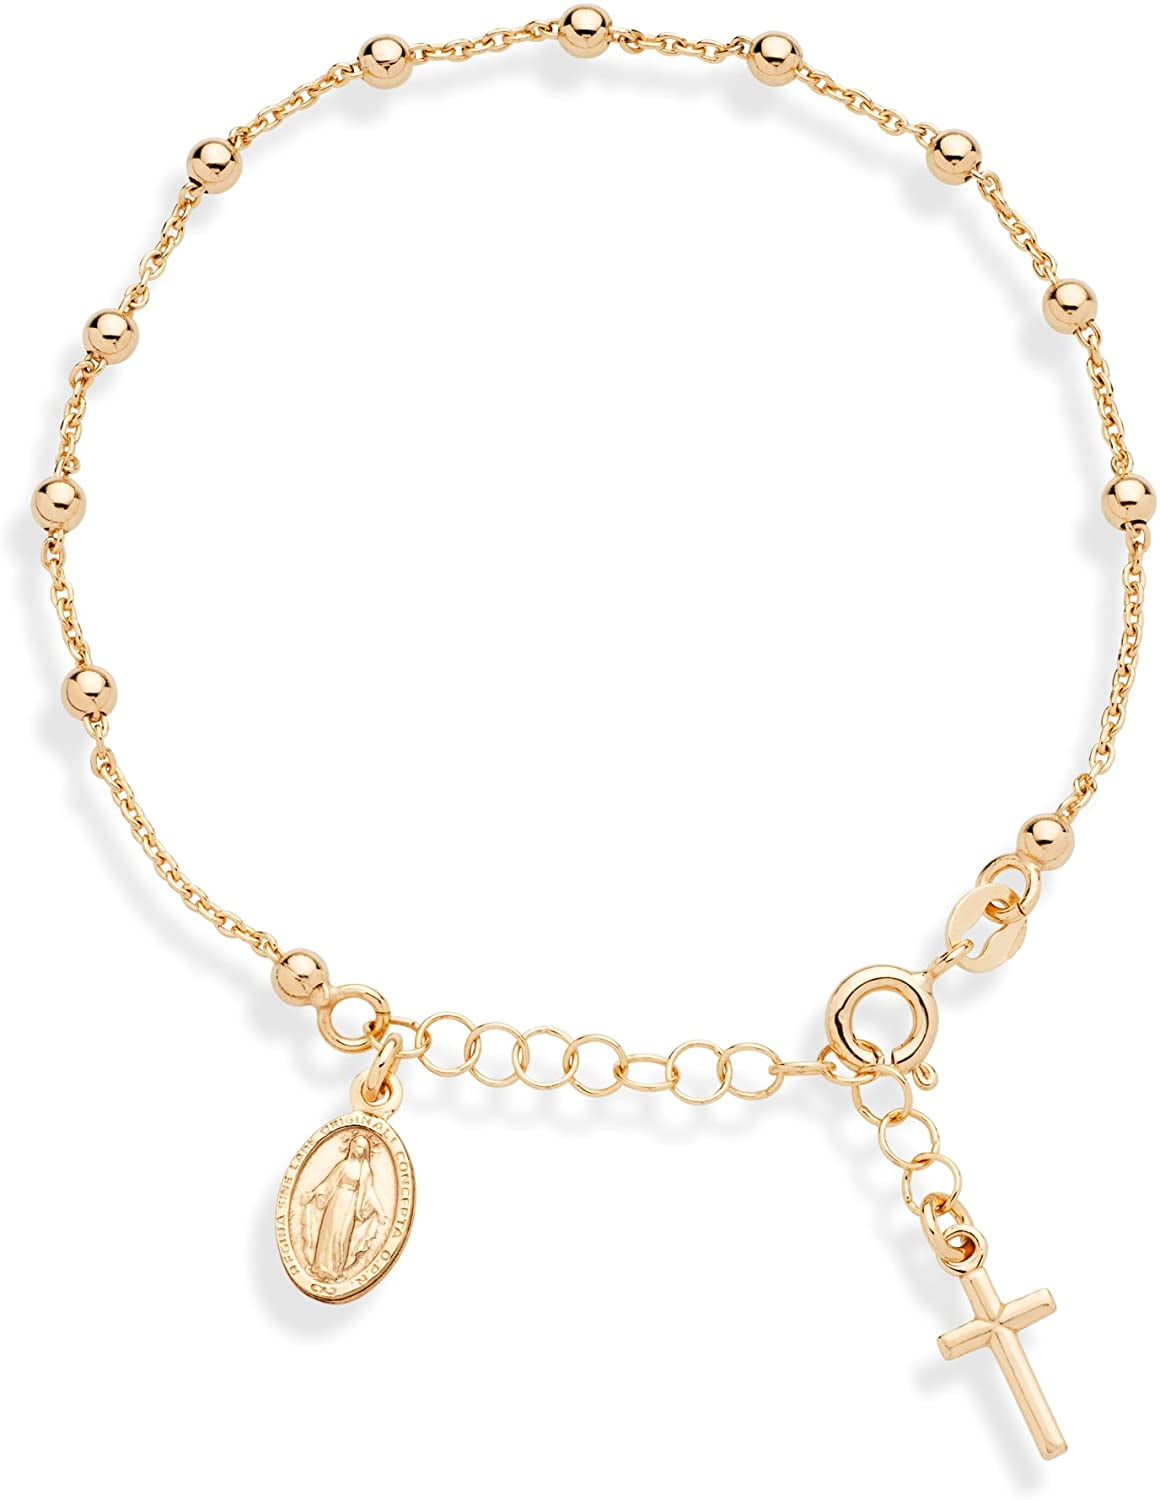 Unique Catholic Bracelets | Artisanal & Ethically Sourced | Guadalupe Gifts